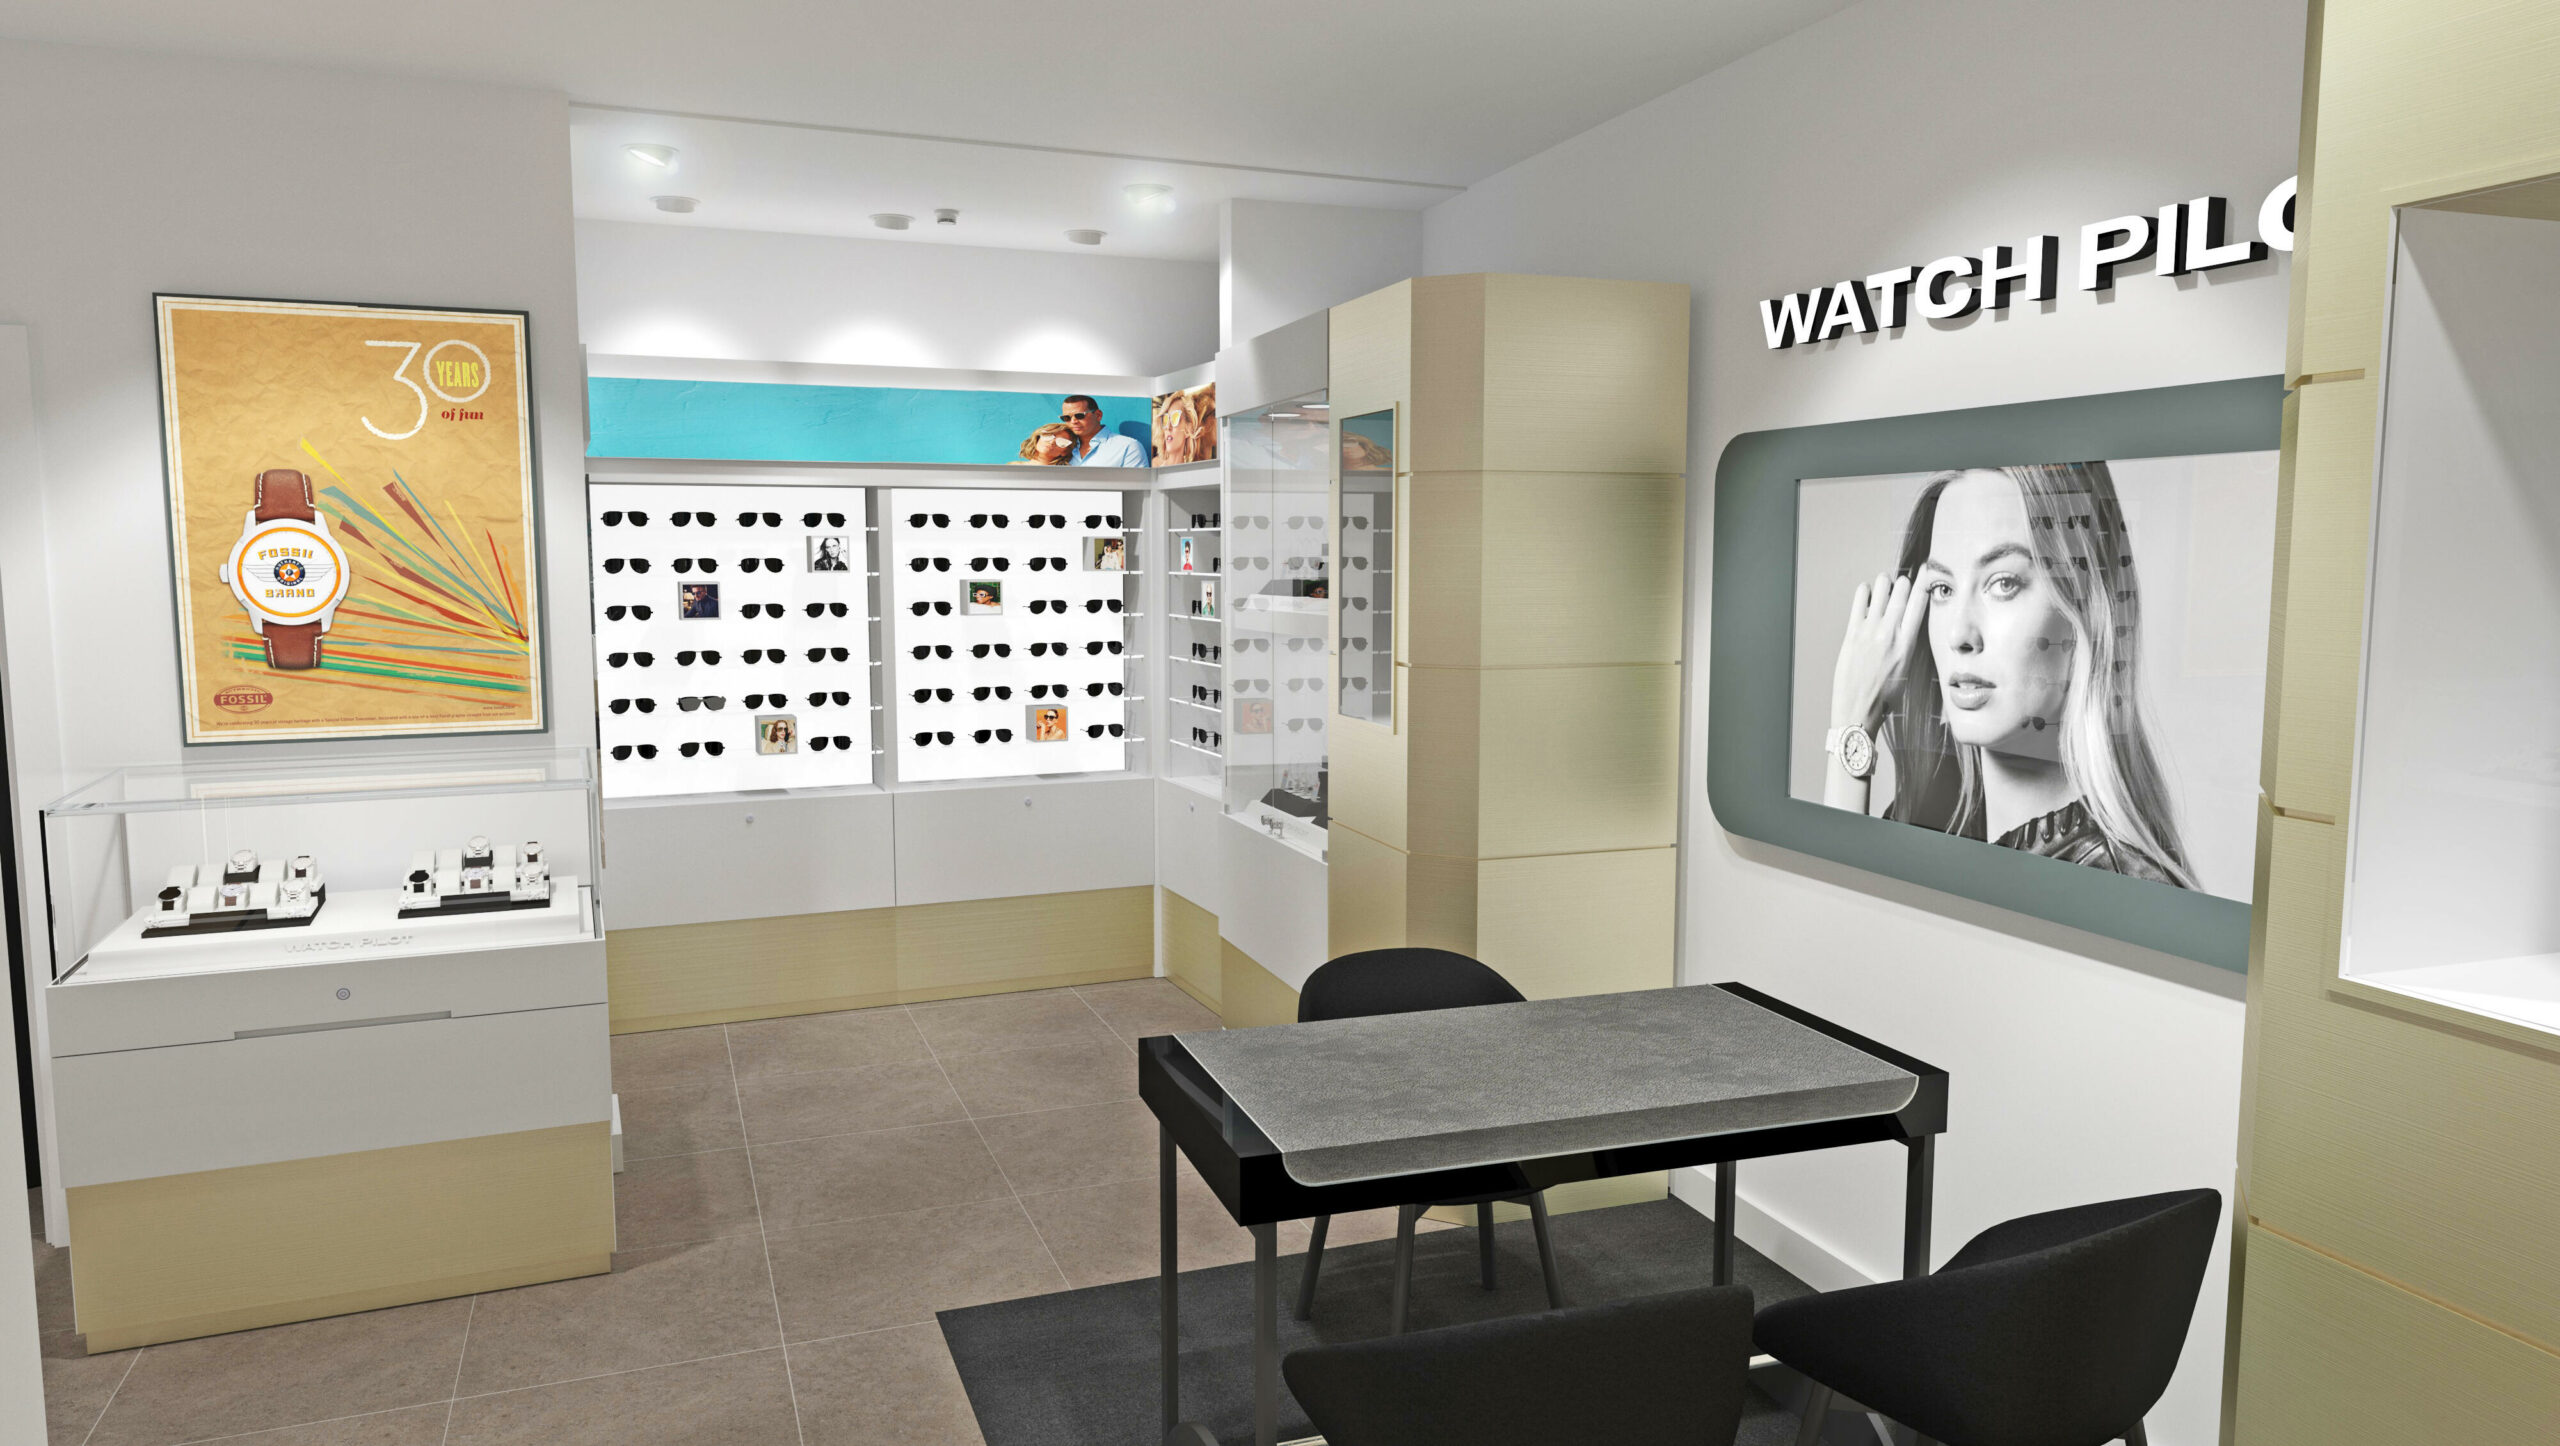 Online watch retailer WatchPilot to open first high street store in Richmond - TheIndustry.fashion